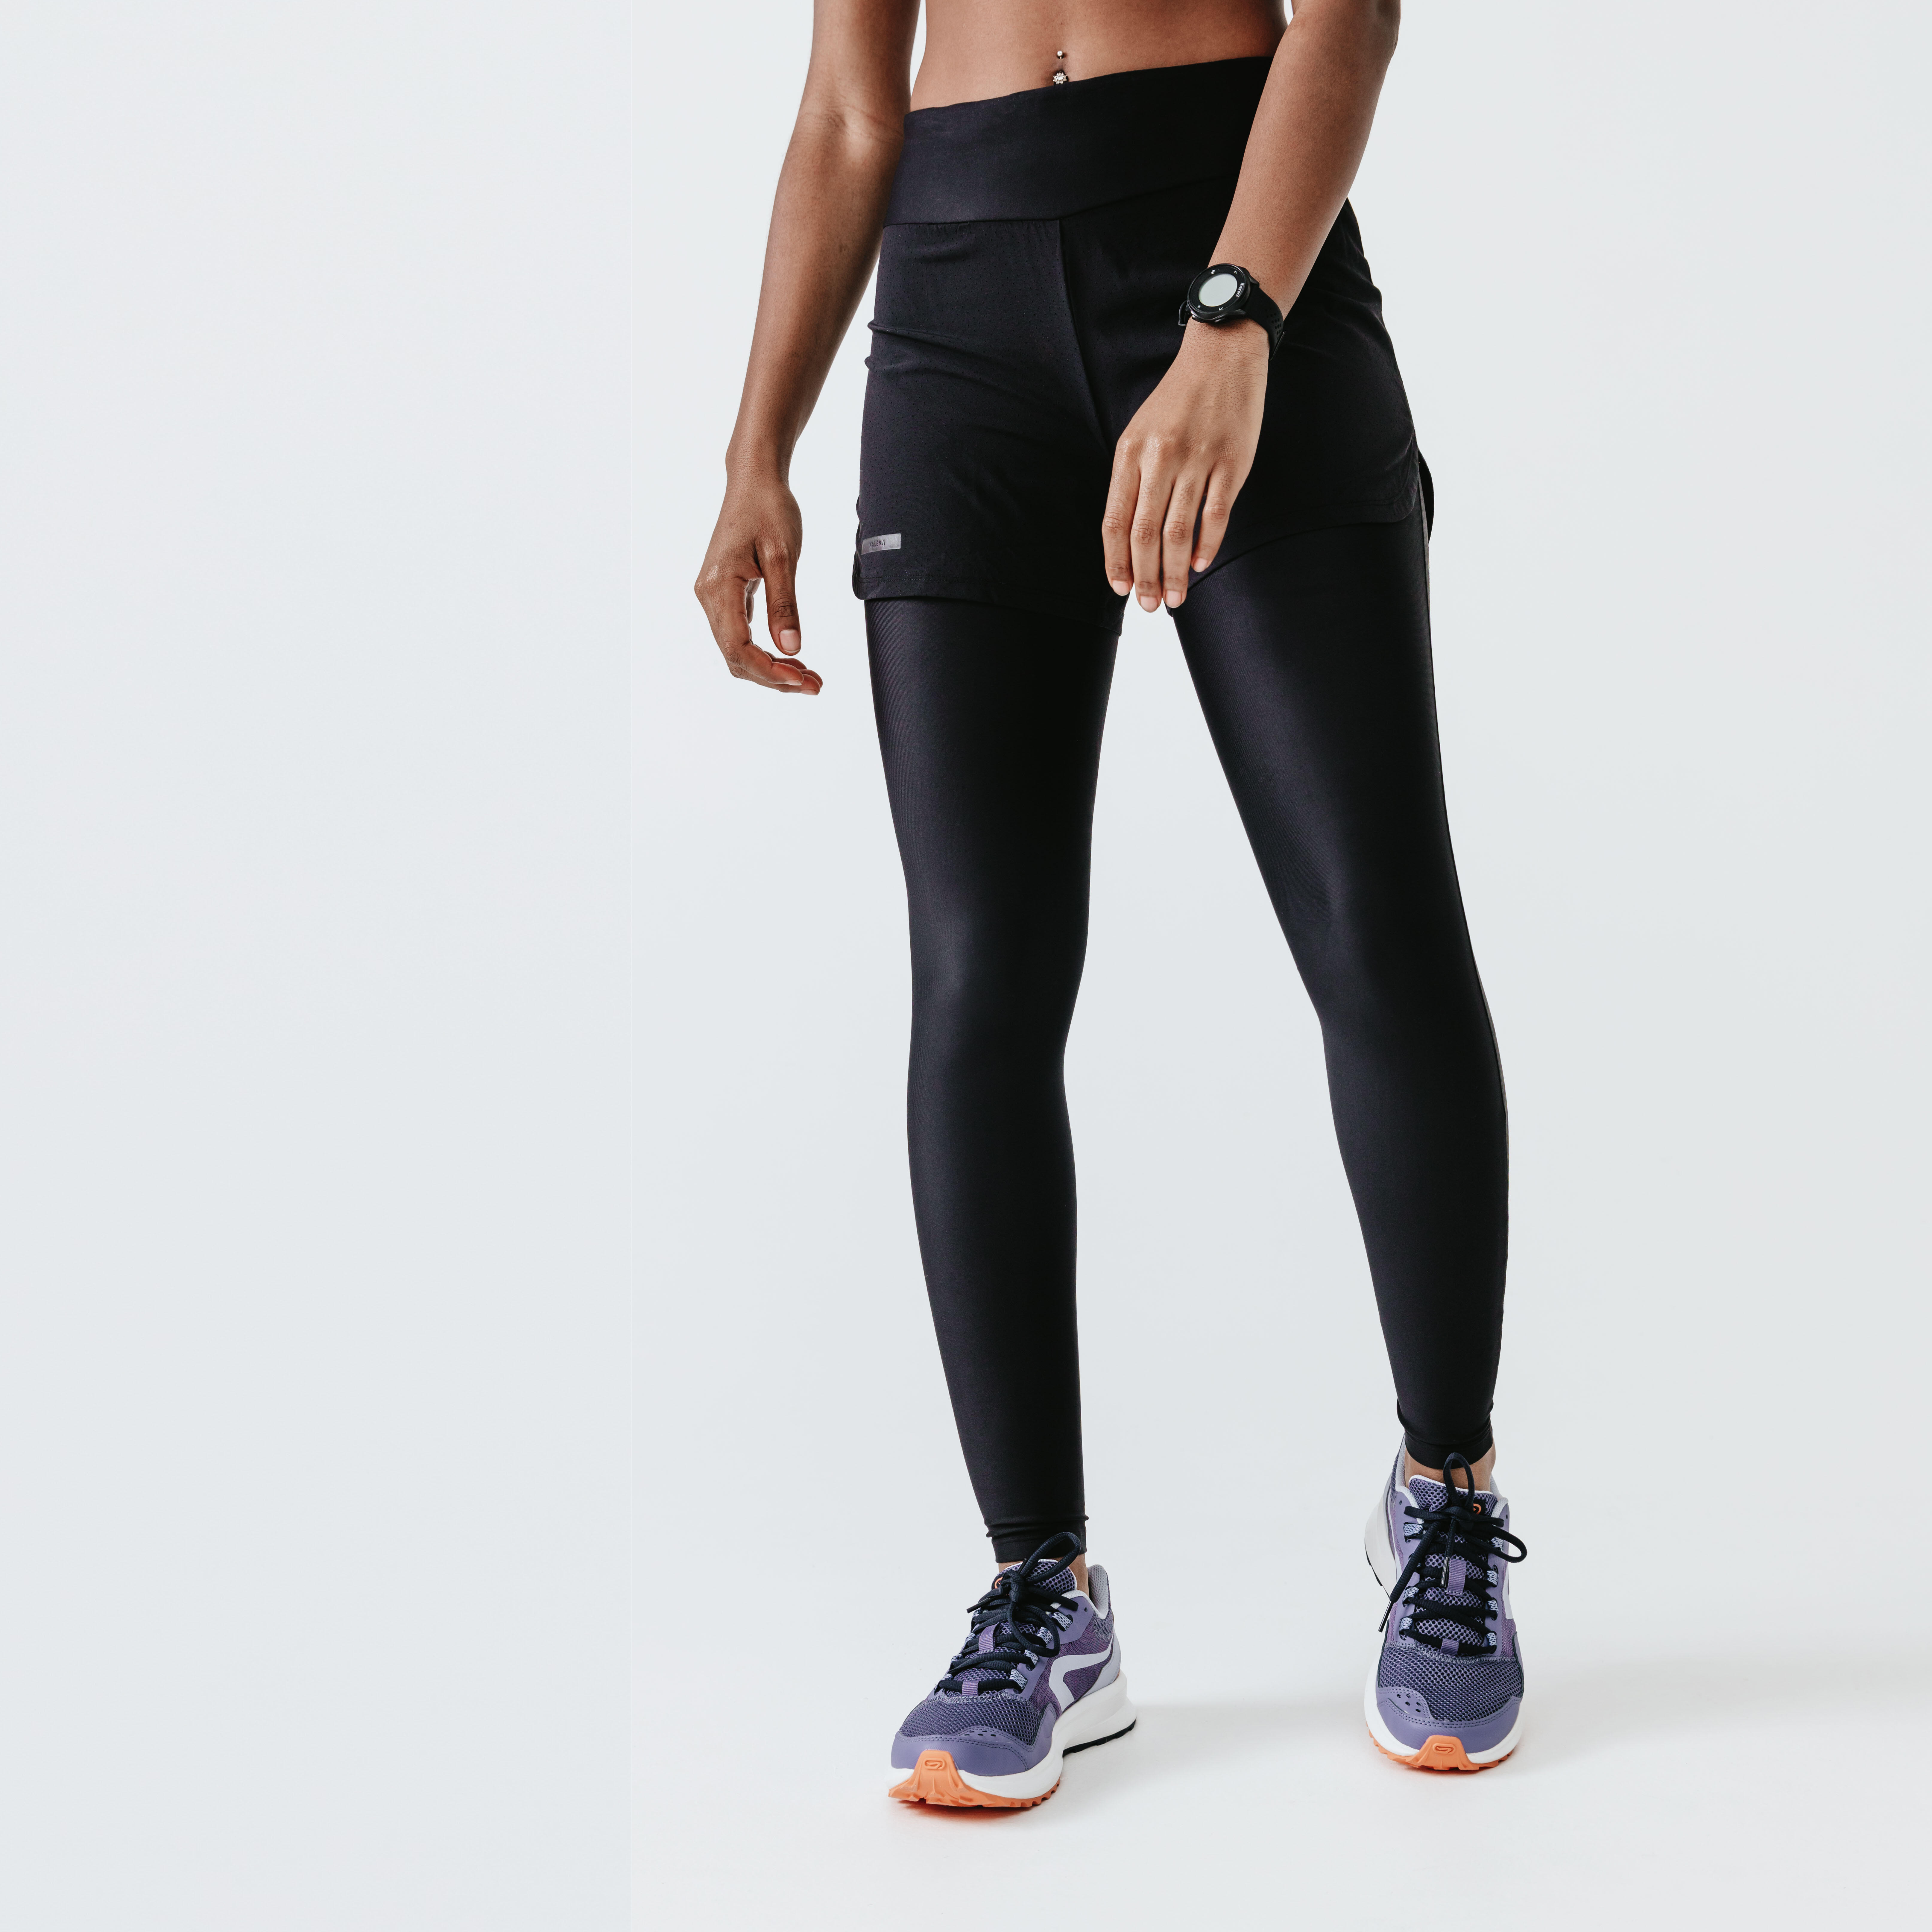 adidas Training Sports Club graphic legging shorts in black | ASOS